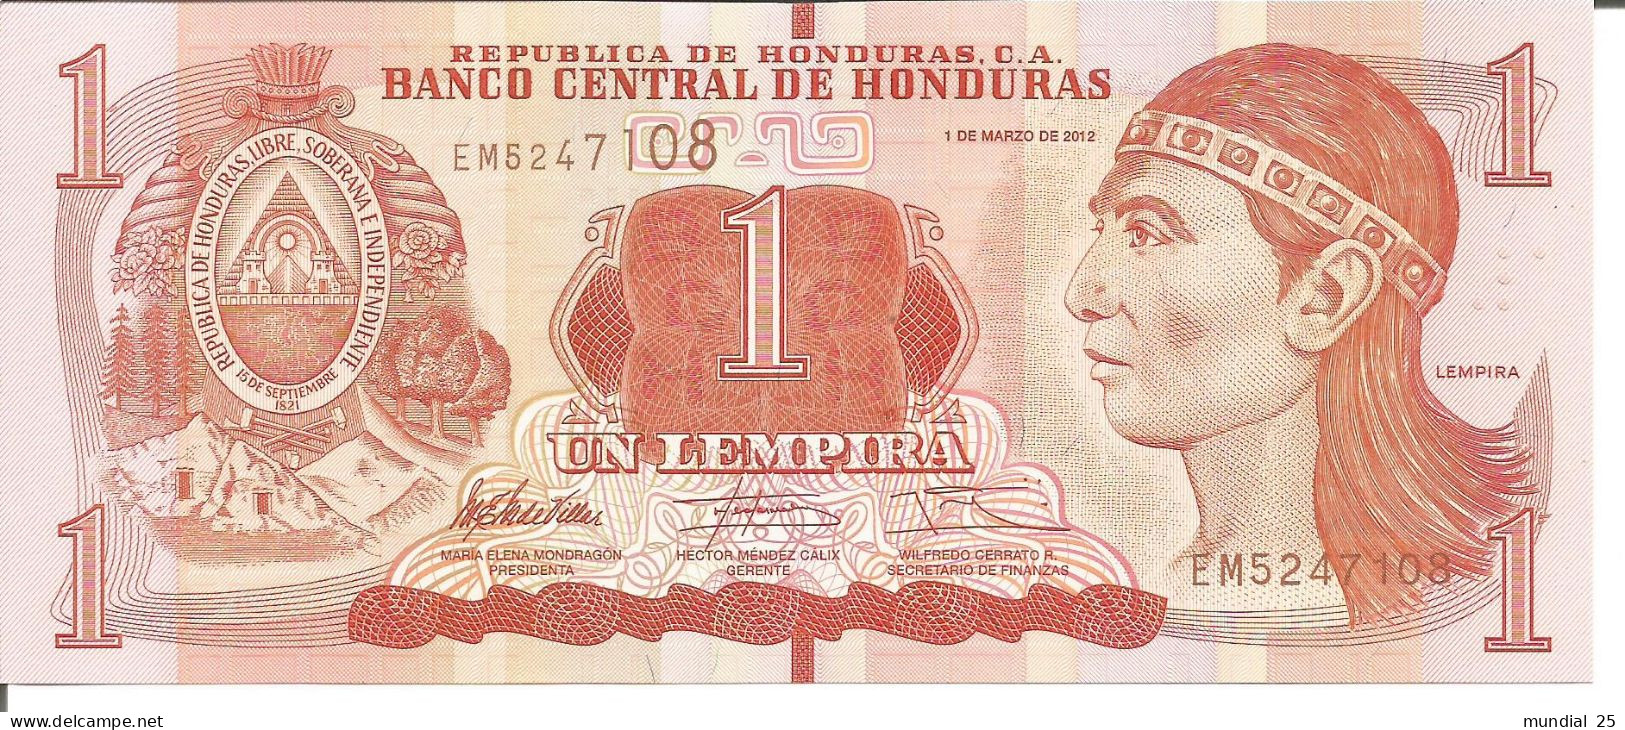 2 HONDURAS NOTES 1 LEMPIRA 01/03/2012 - Honduras